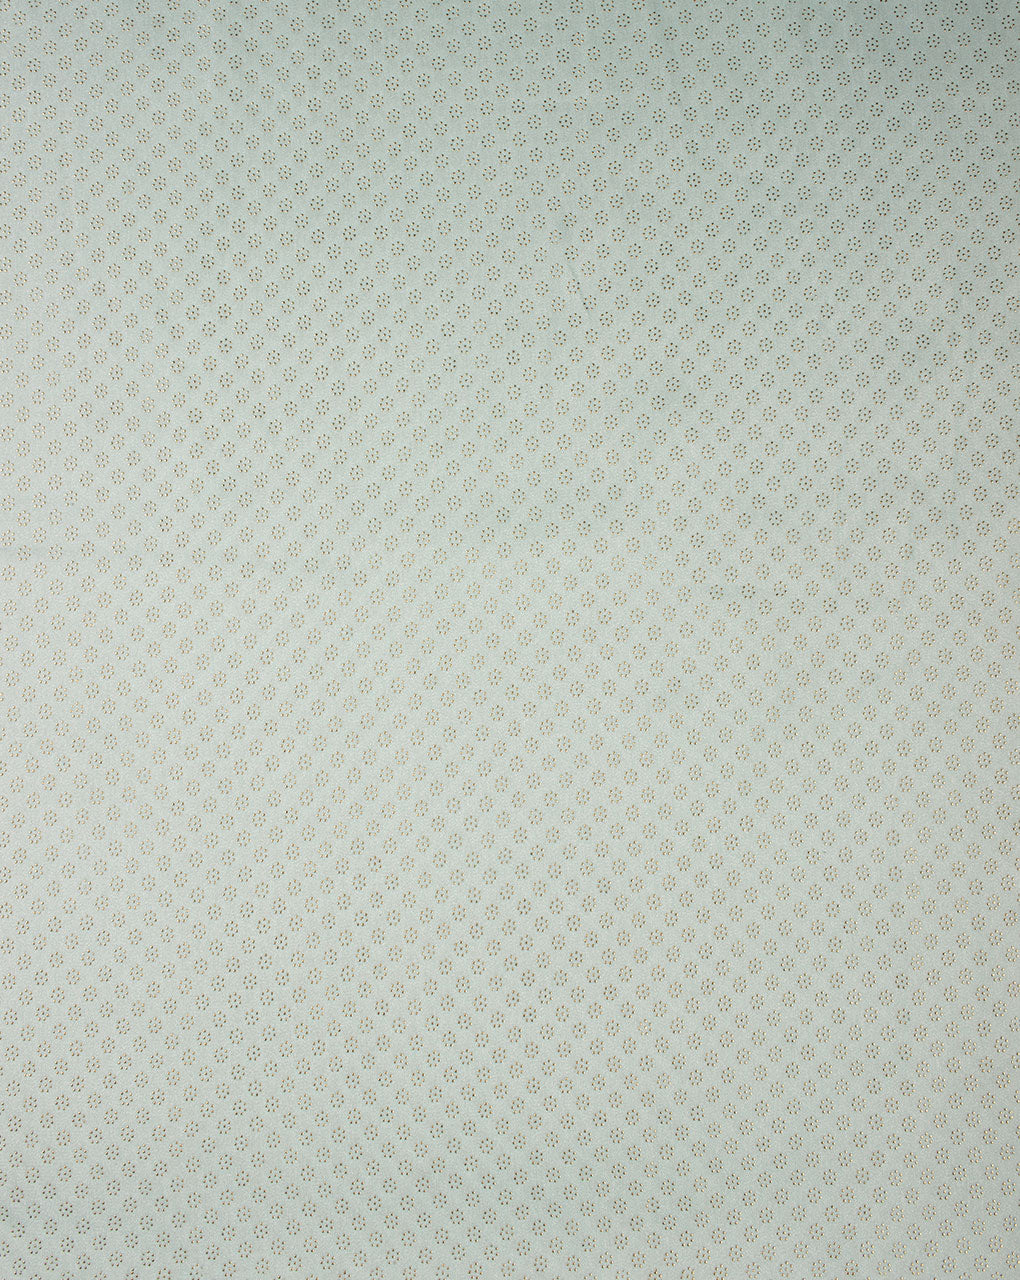 Foil Screen Print Polyester Fabric - Fabriclore.com